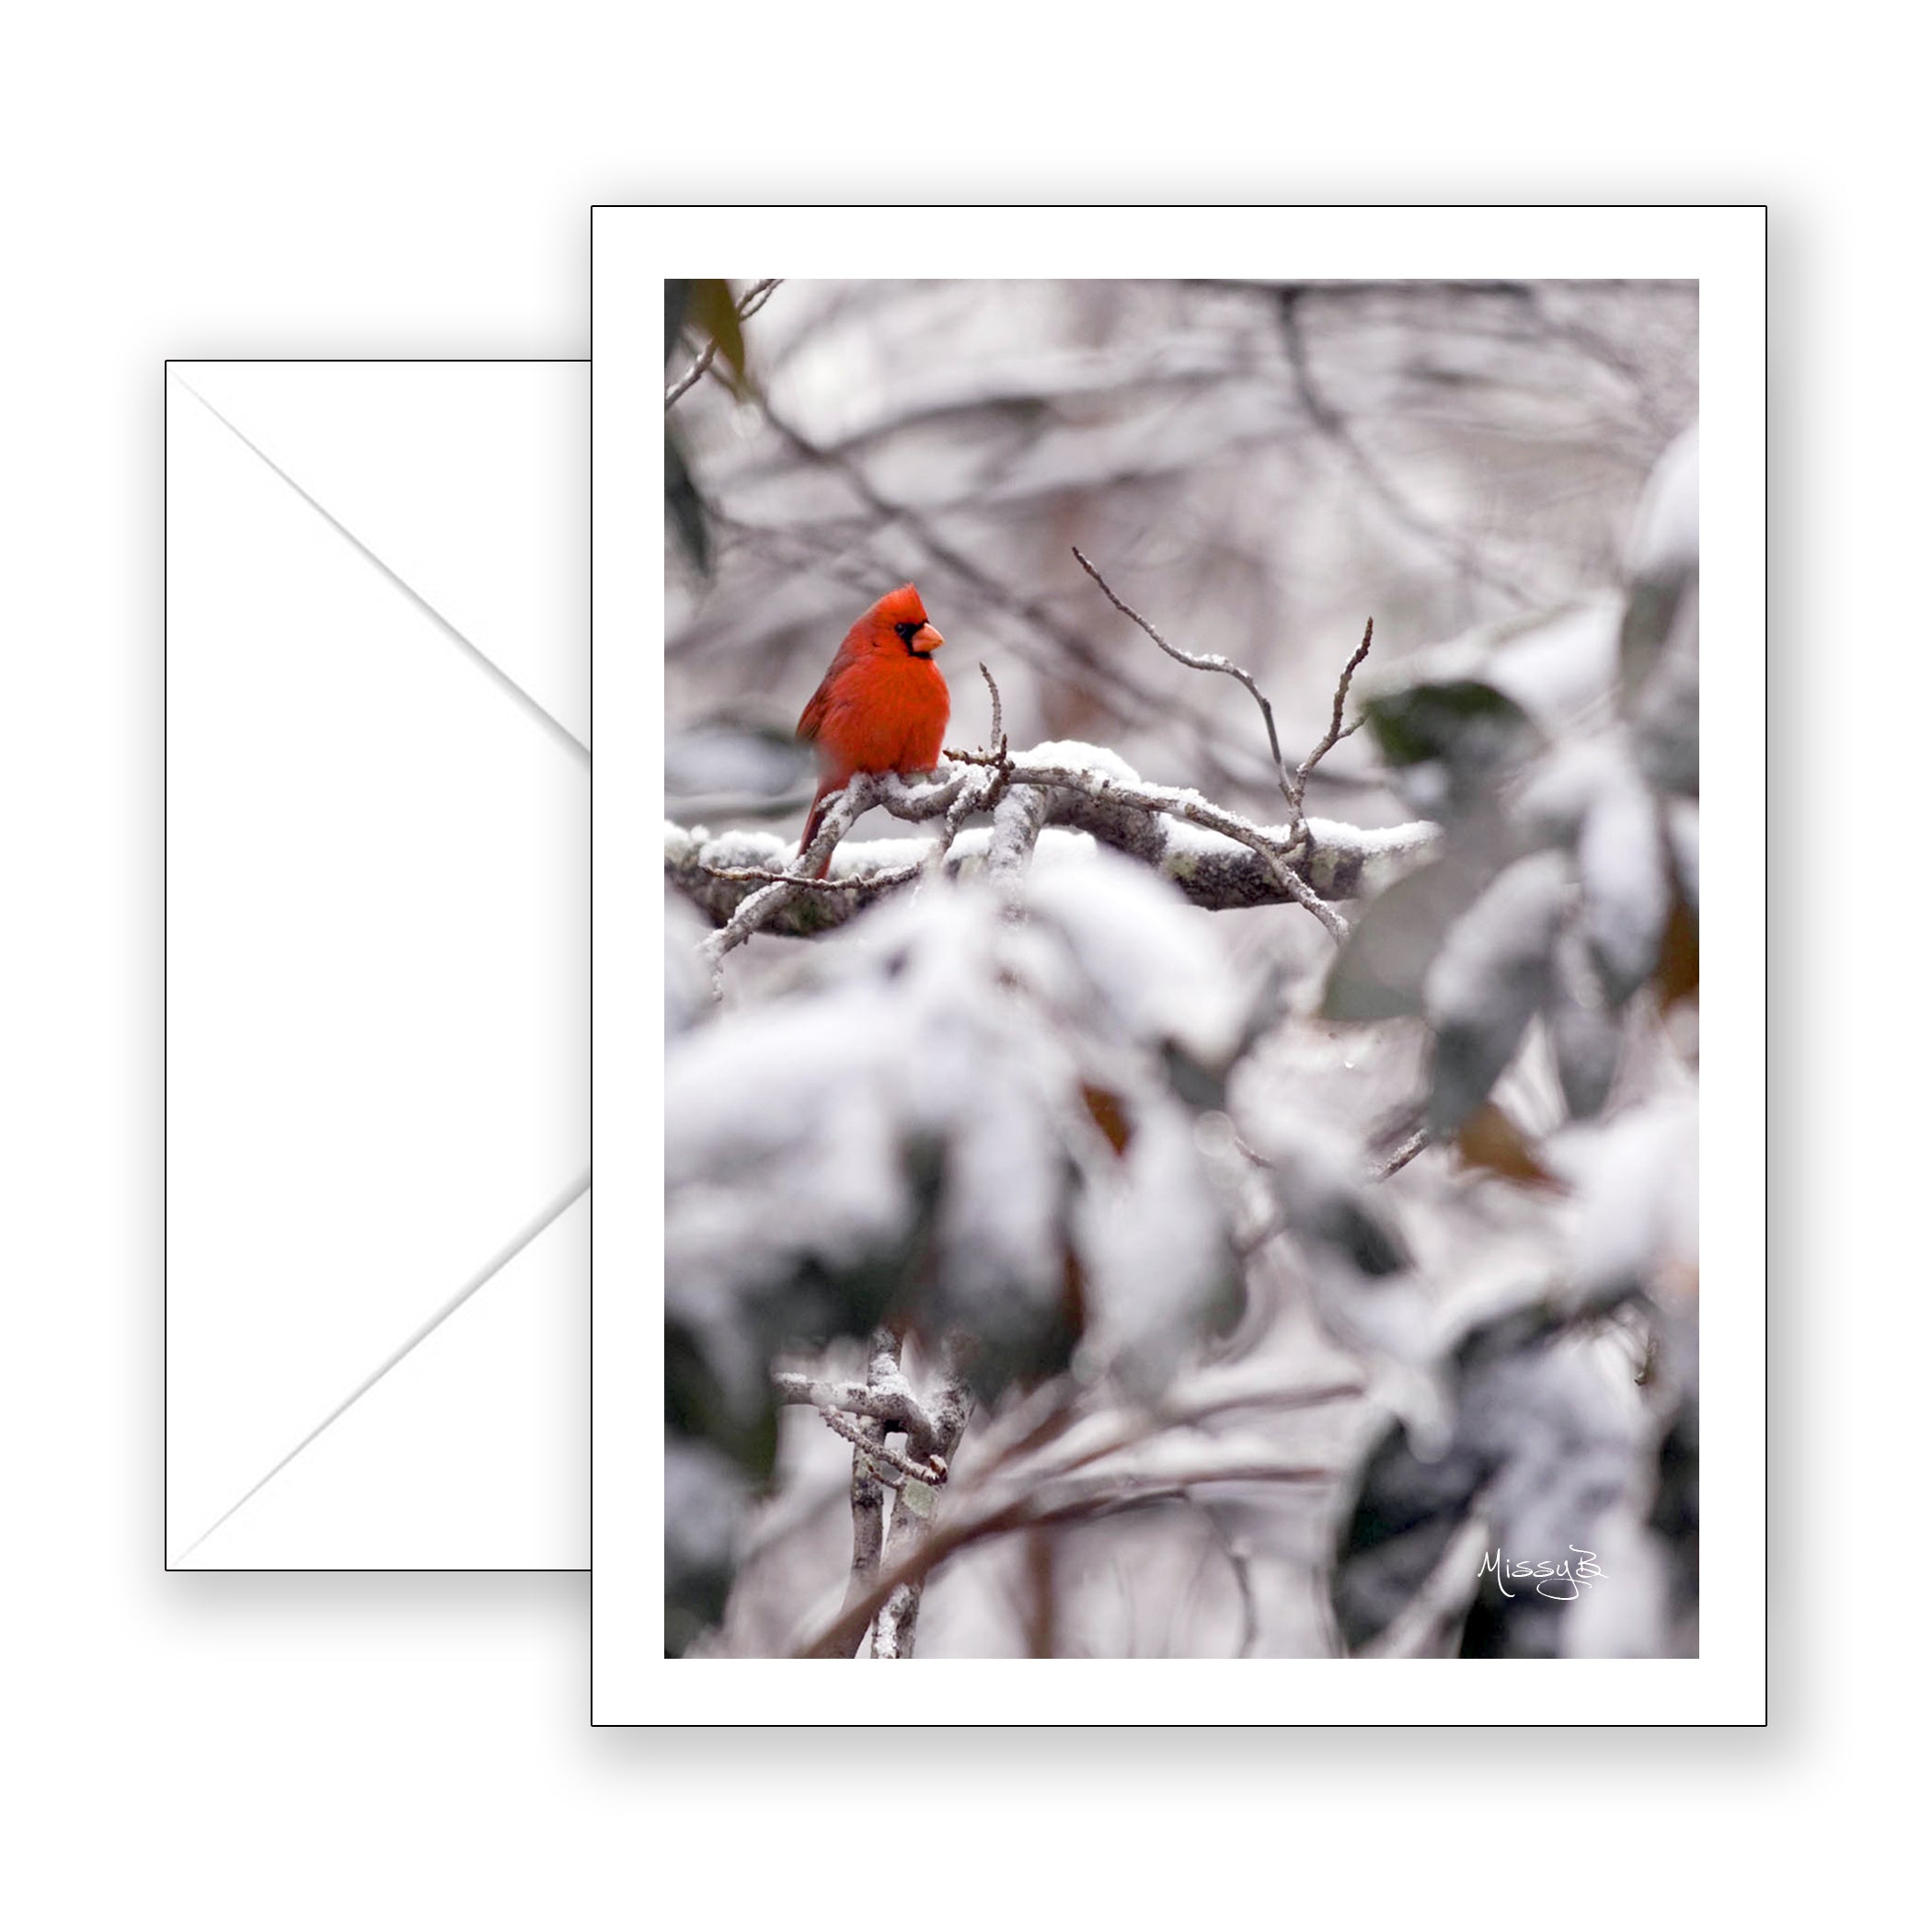 Missy's Red Bird - Blank Art Card